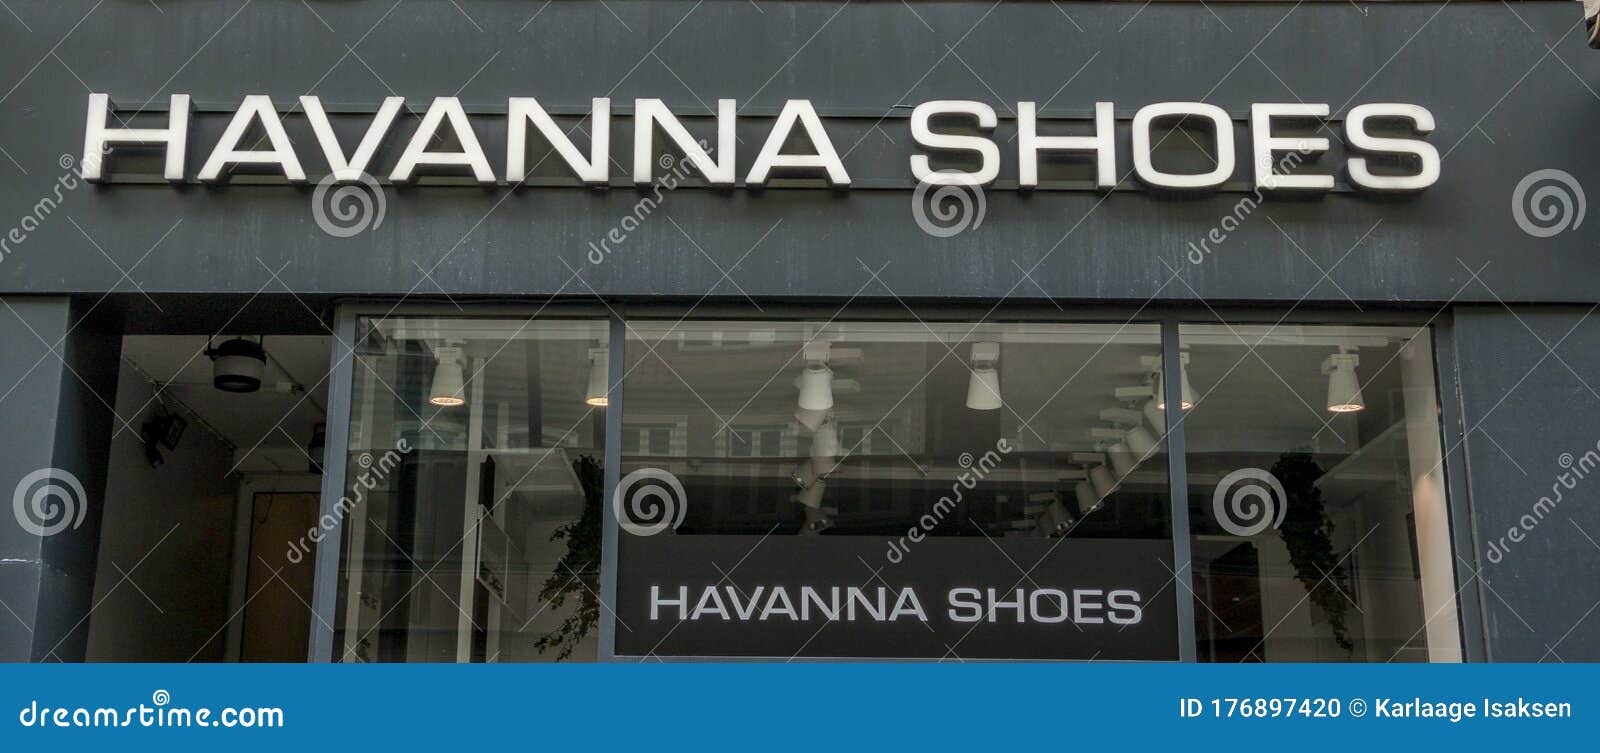 Logo the Havanna Shoes Building in Aarhus Image - Image of aarhus, firm: 176897420